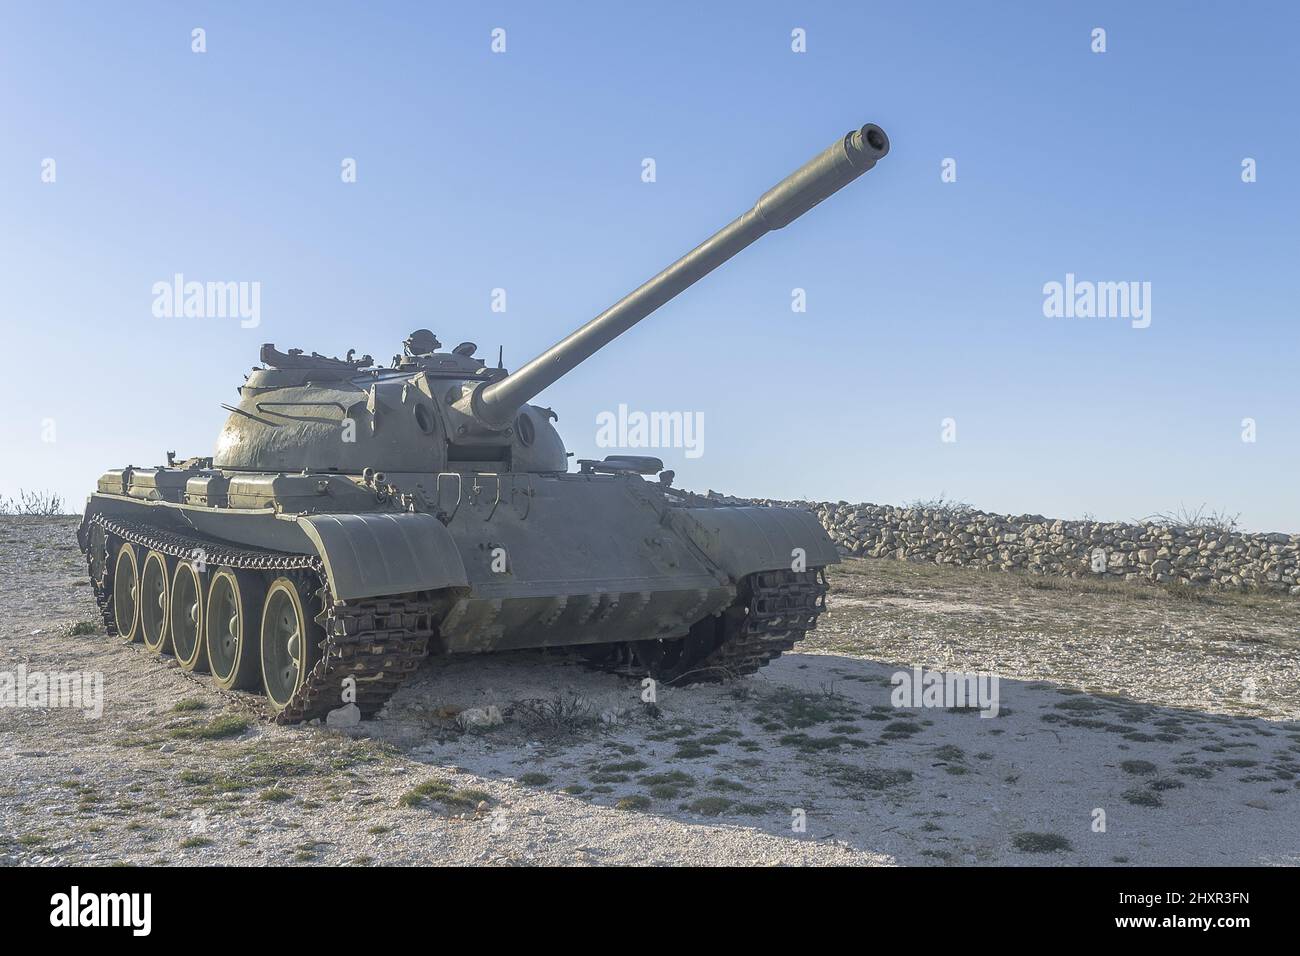 Russian made main battle tank on a battlefield Stock Photo